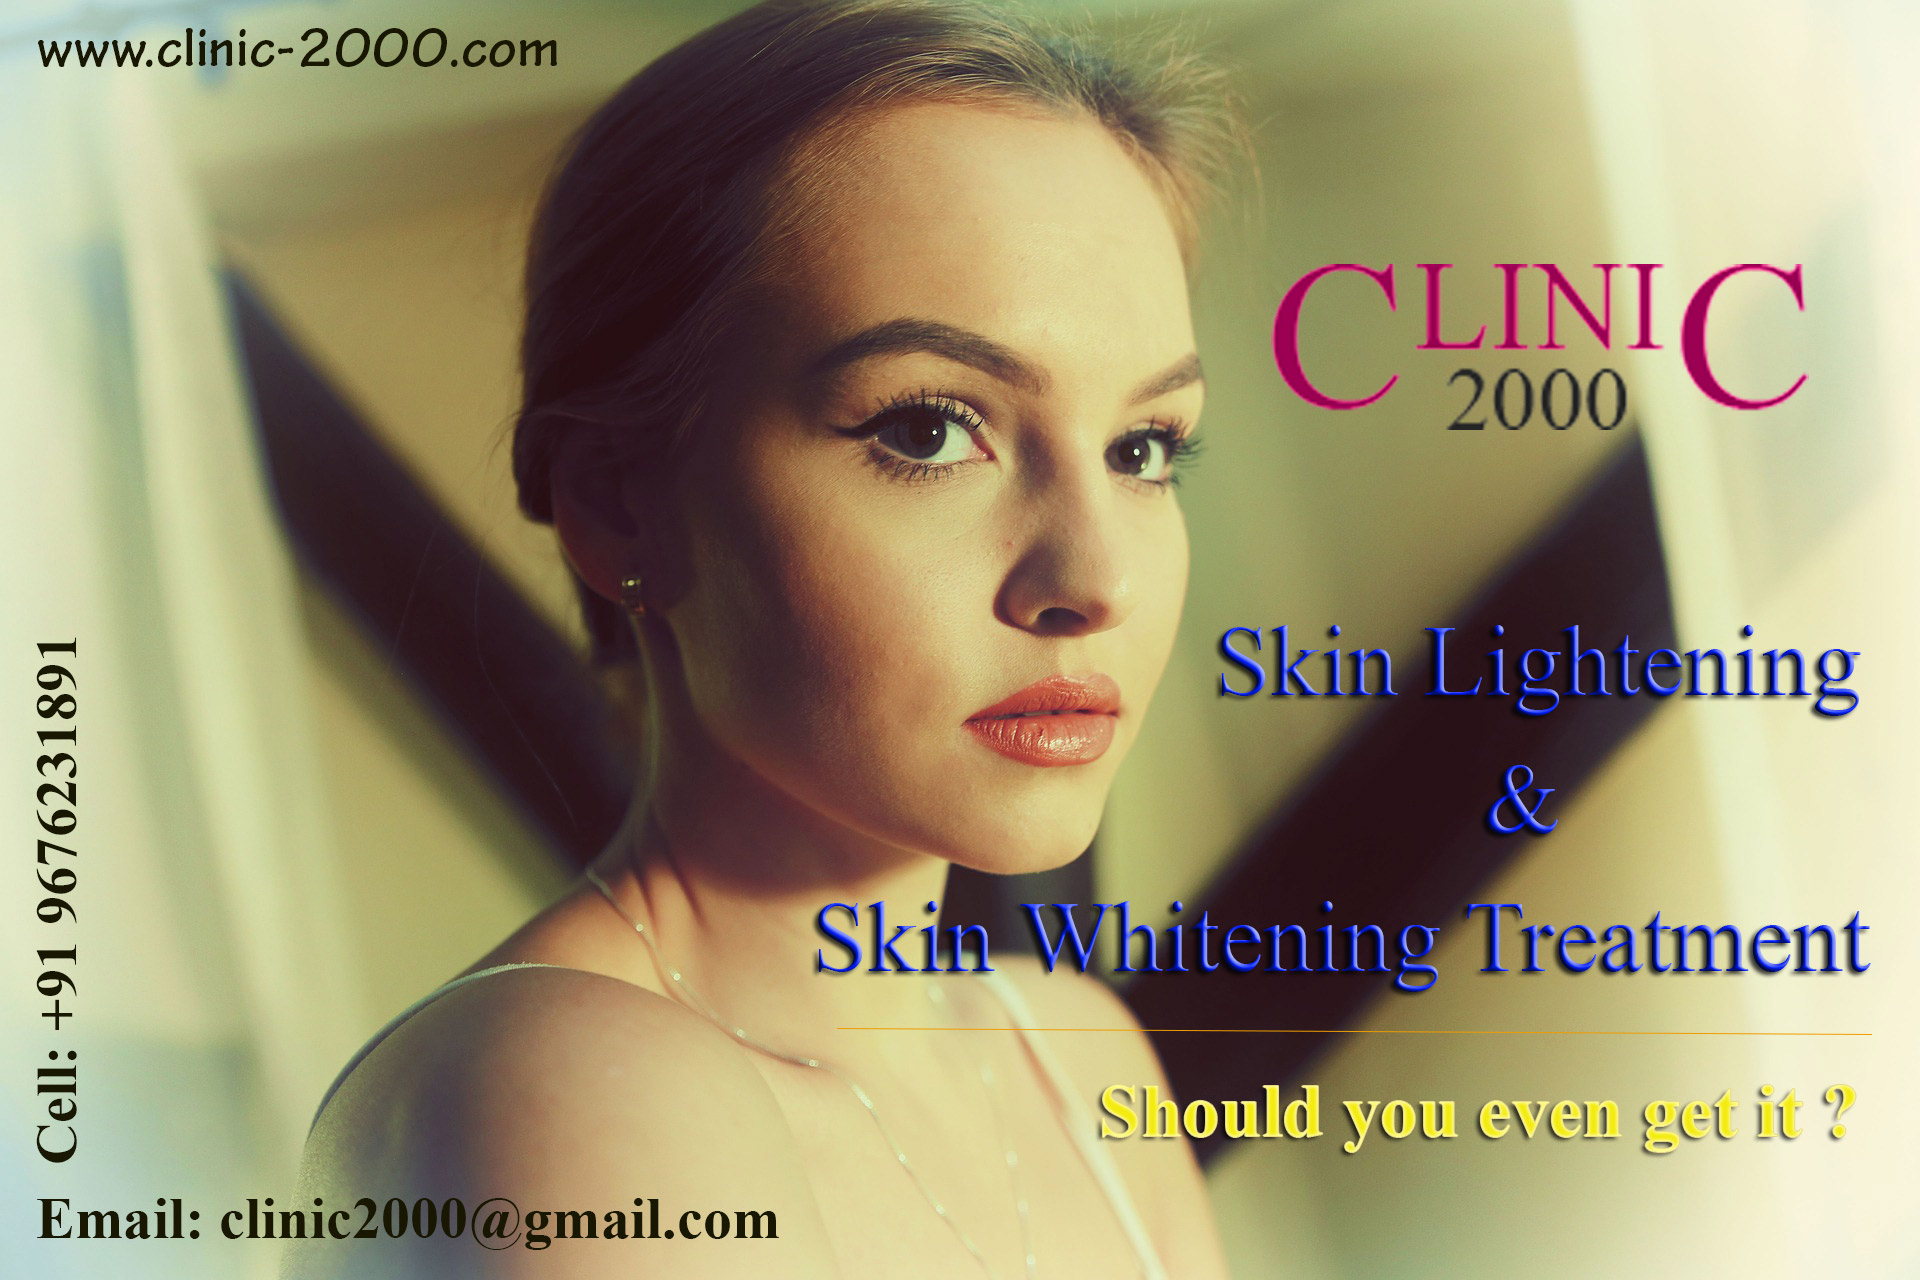 Skin Lightening Treatment in Hyderabad